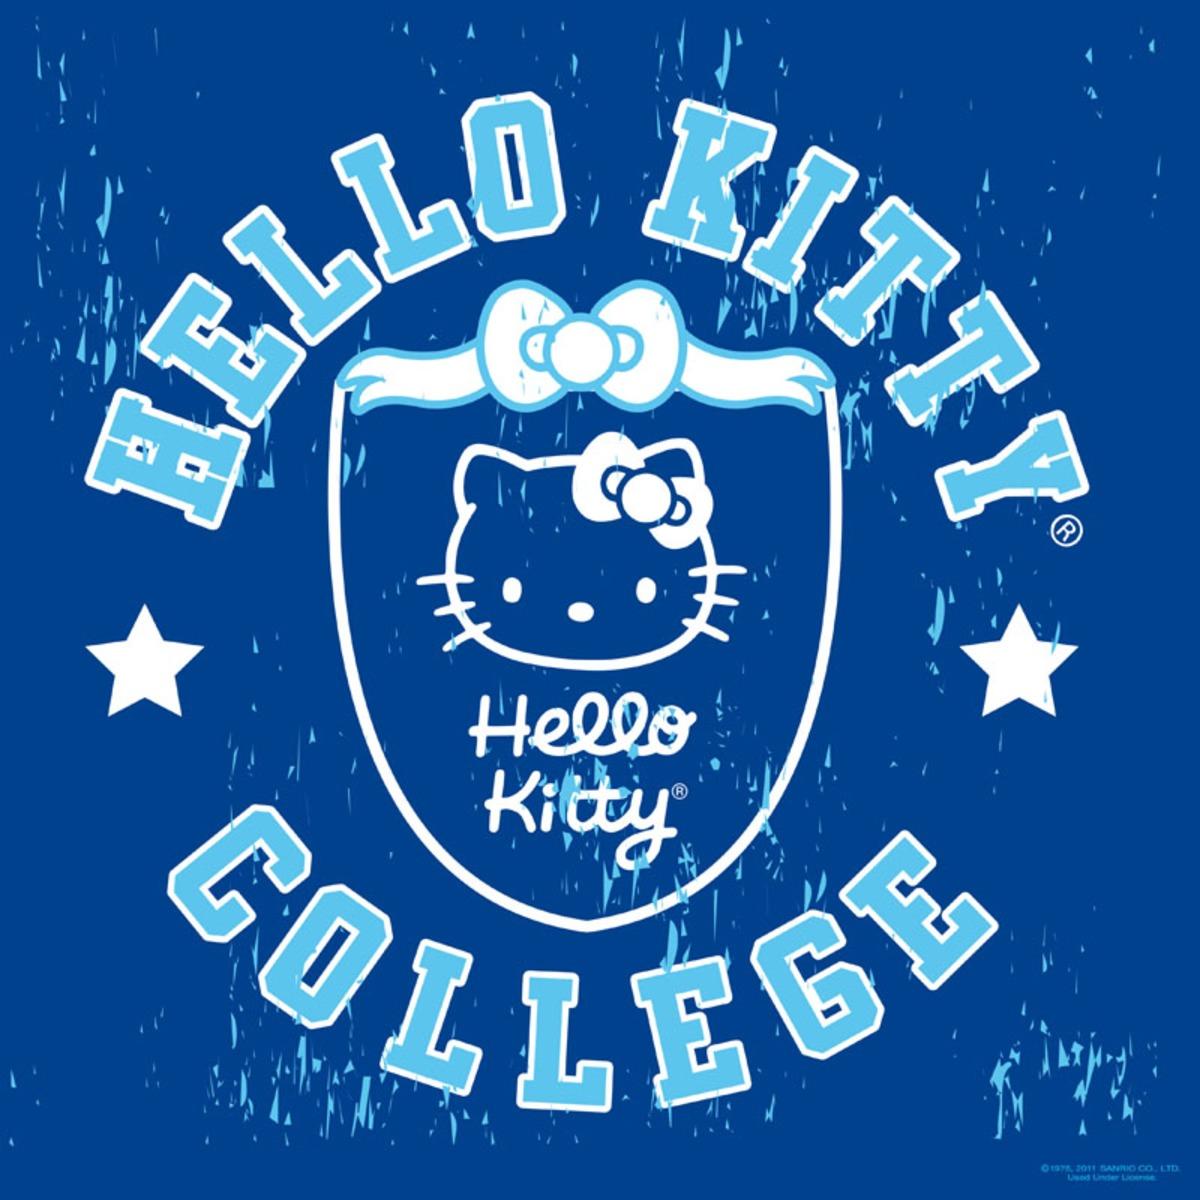 Toile imprimée - 30 x 30 cm - Hello Kitty